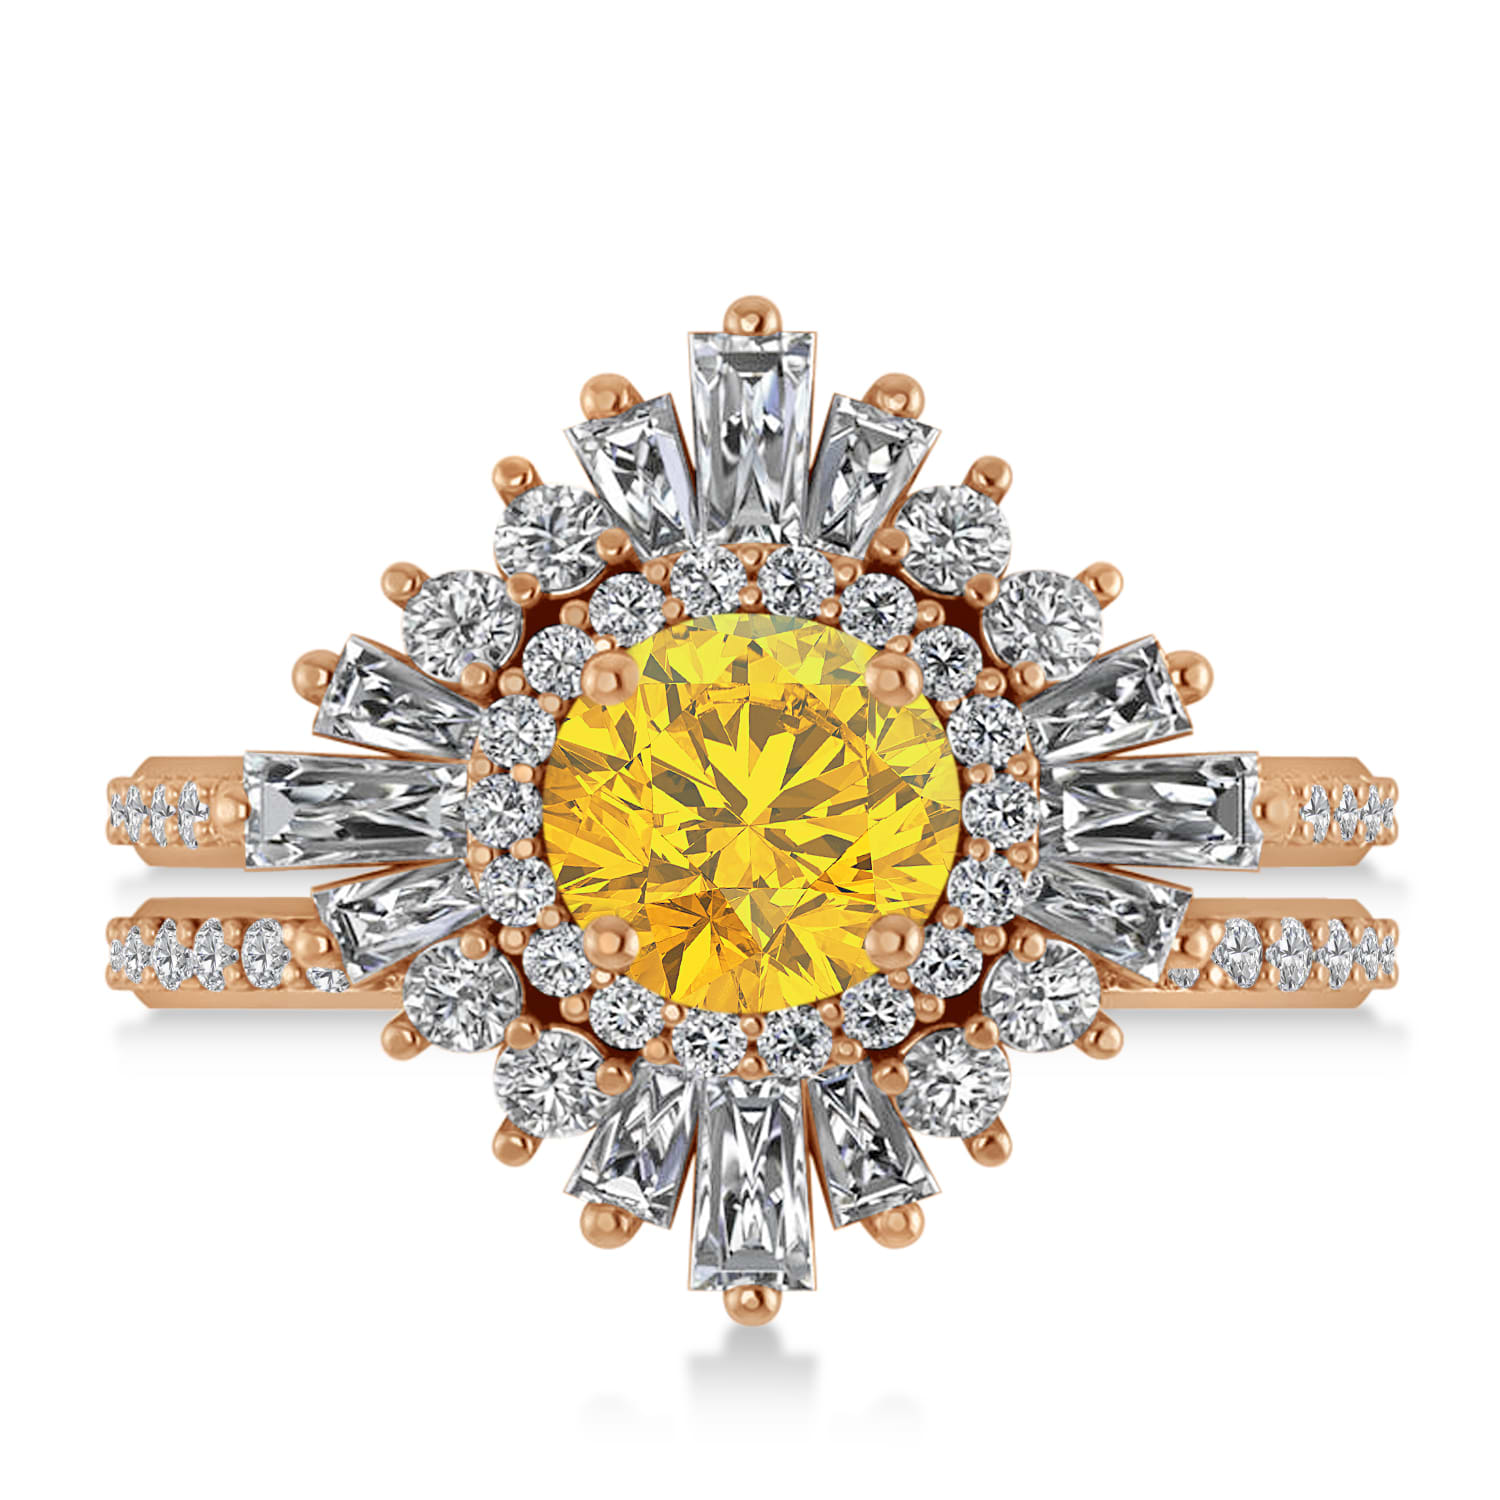 Yellow Sapphire & Diamond Ballerina Engagement Ring 14k Rose Gold (2.74 ctw)